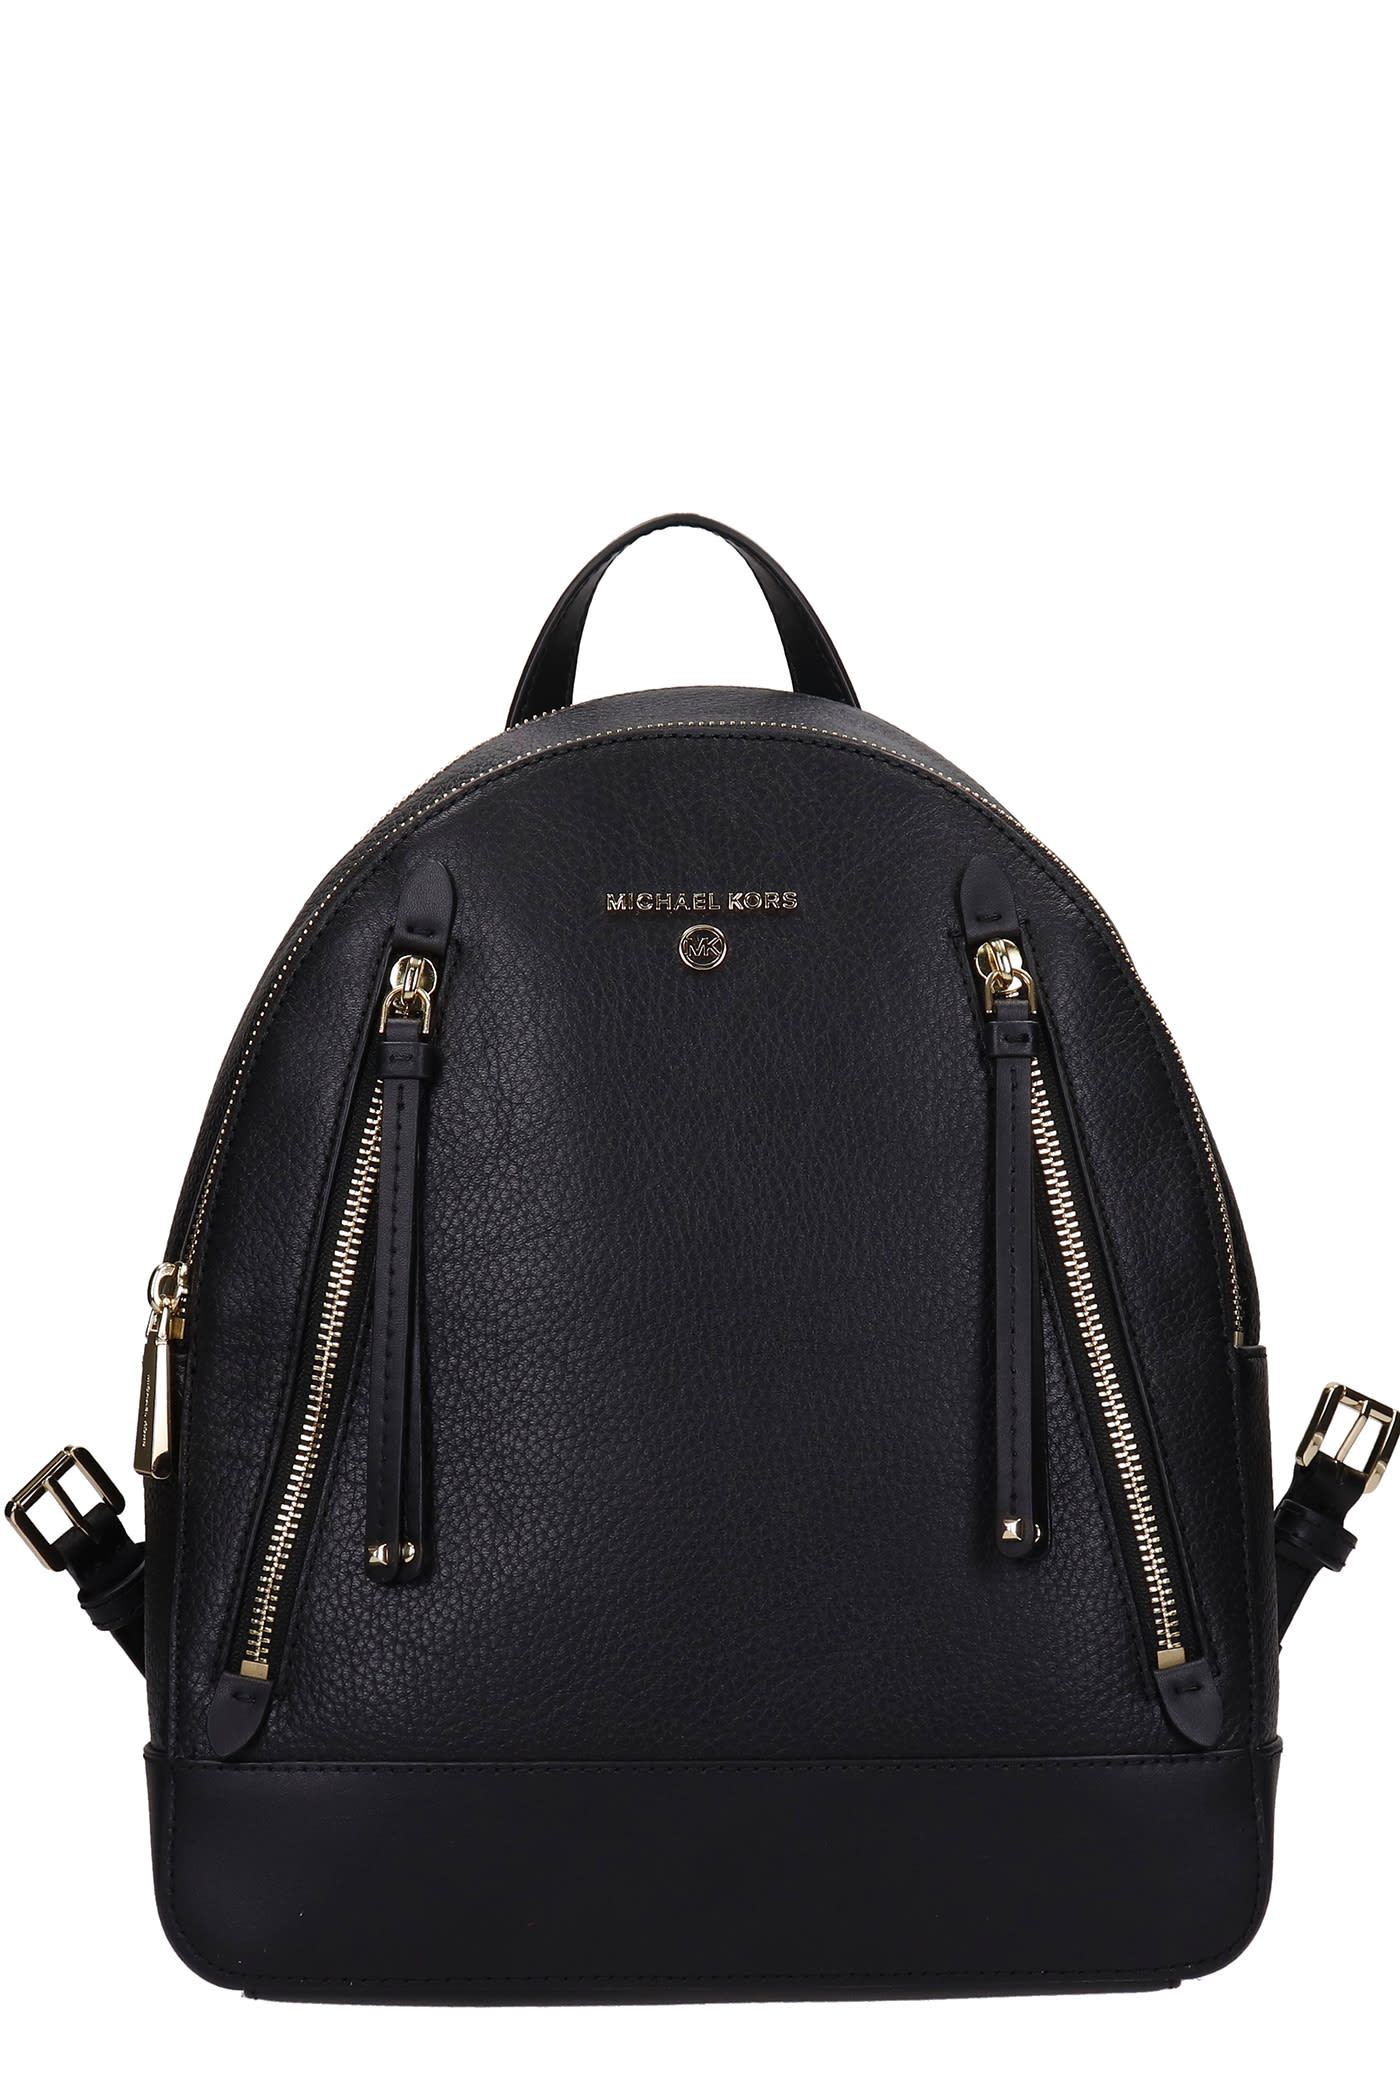 Michael Kors Brooklyn Backpack In Black Leather